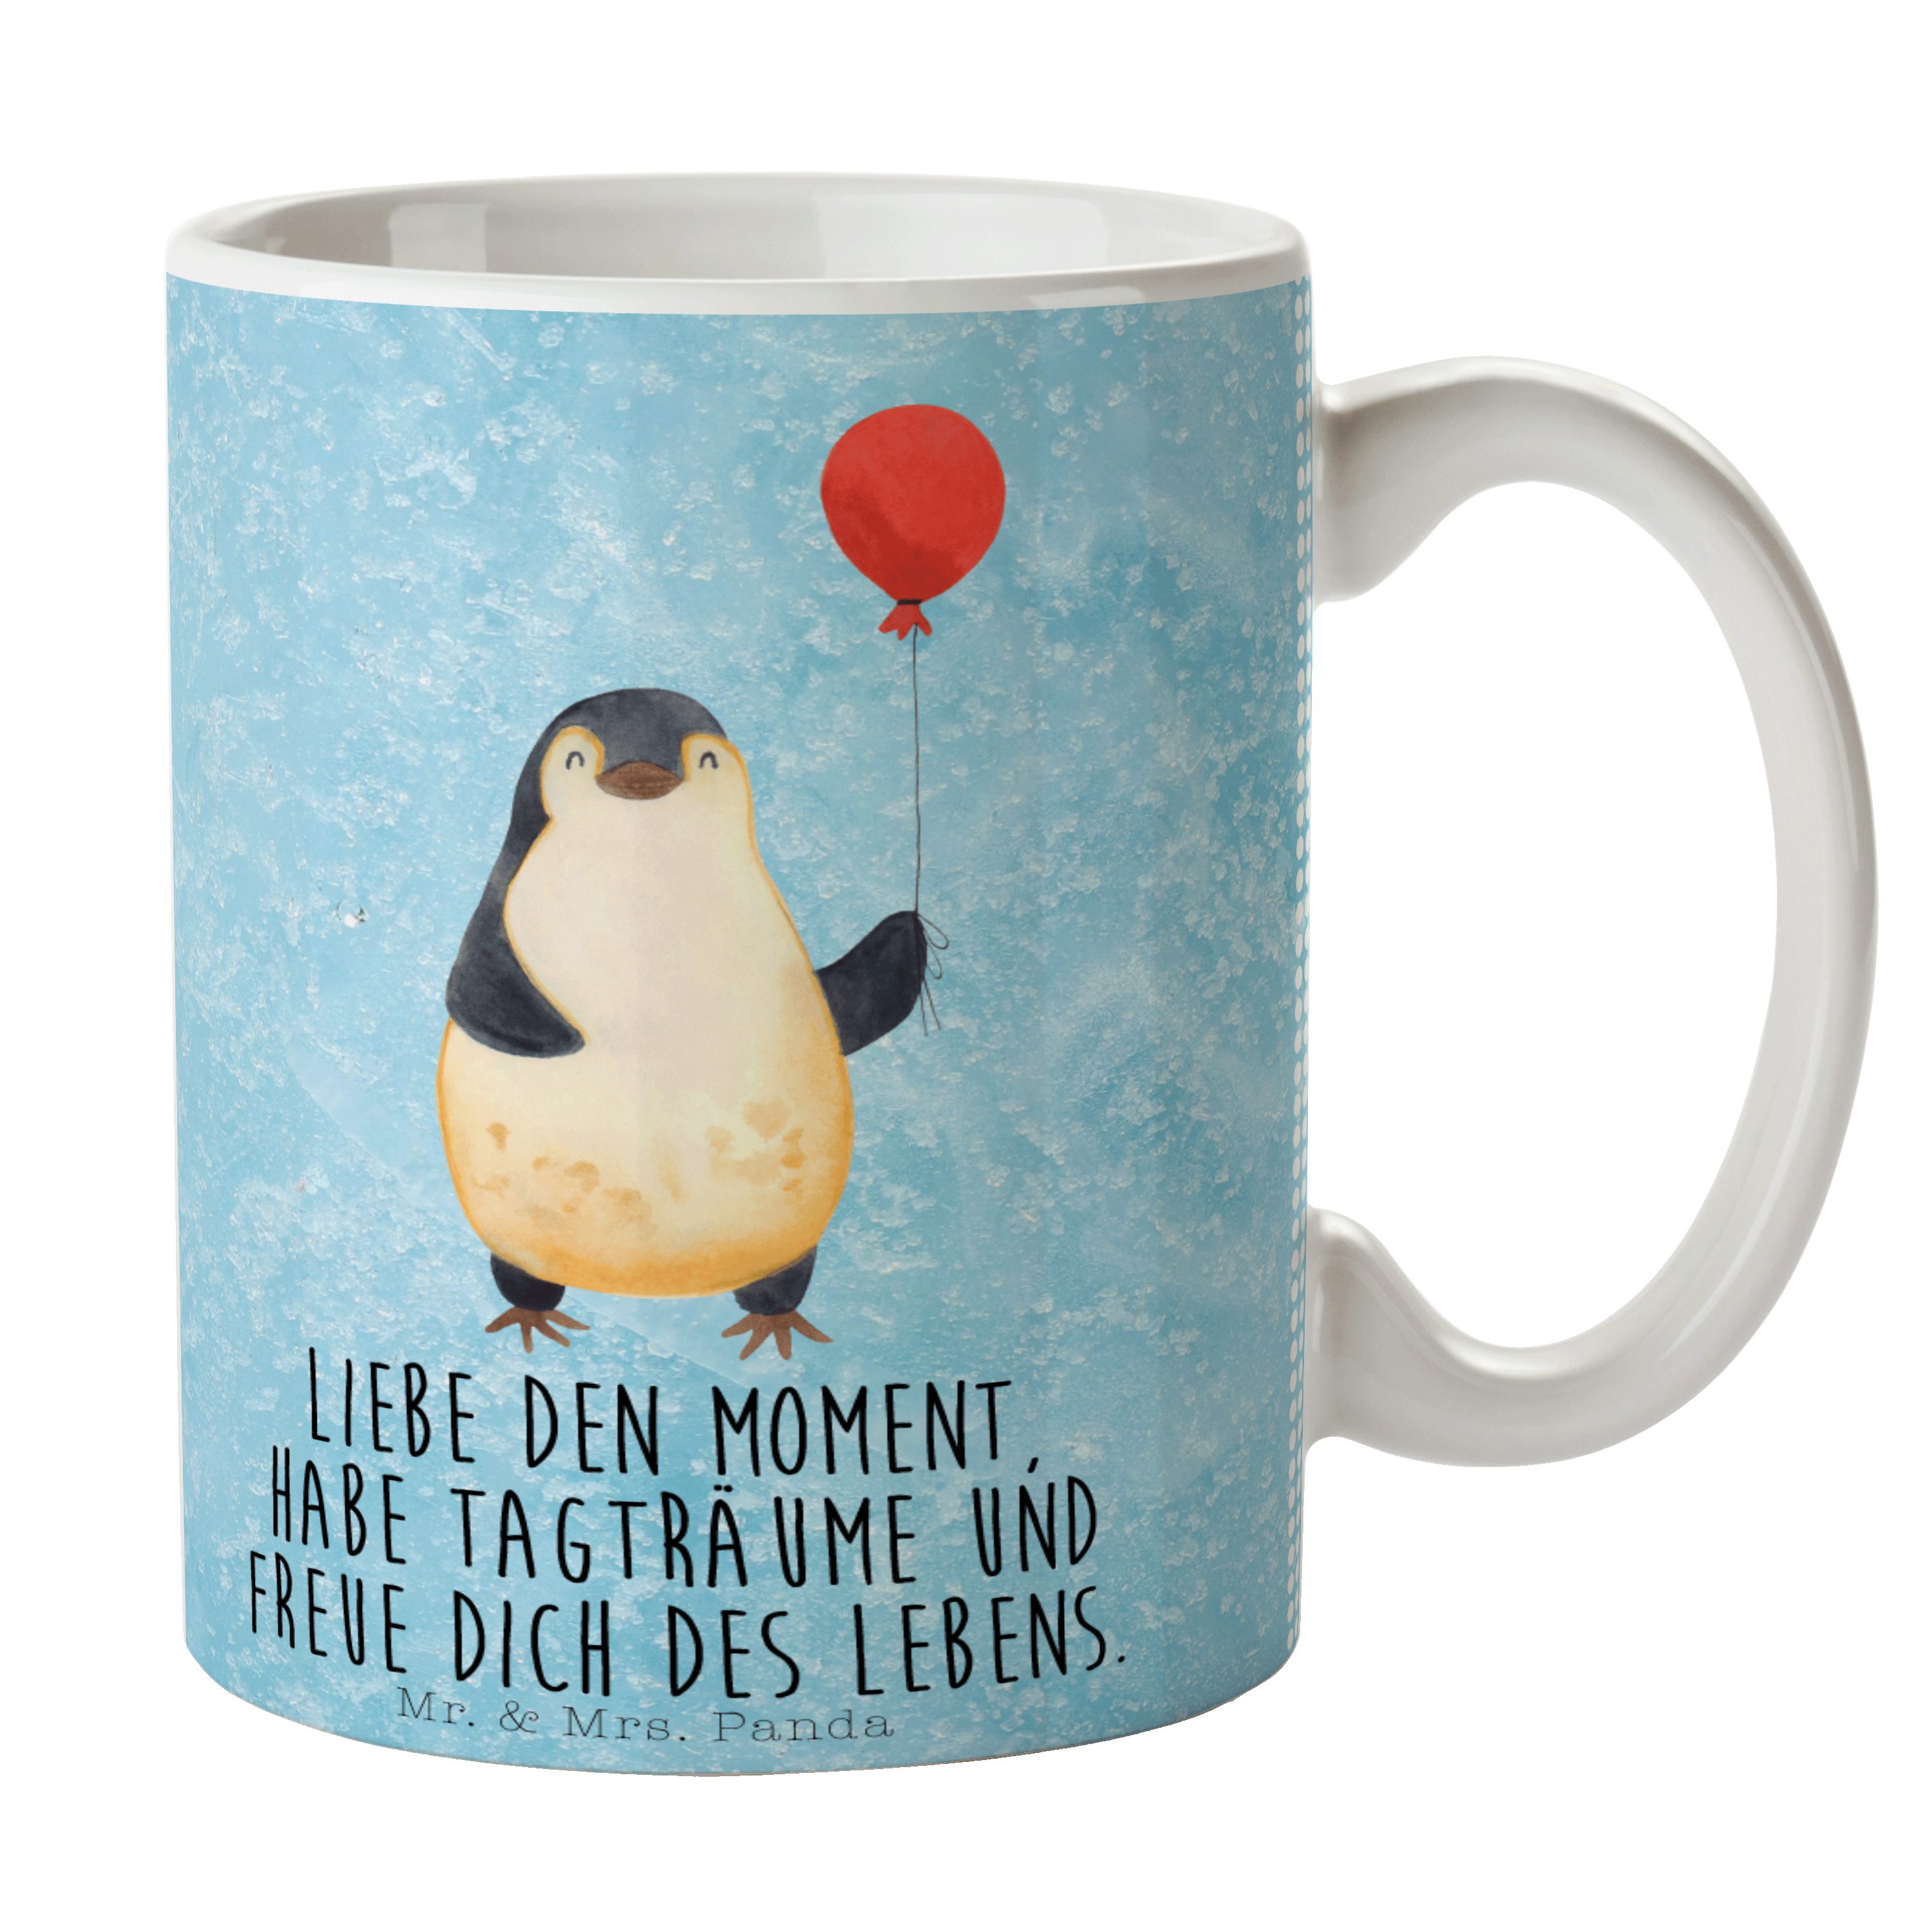 Mr. & Mrs. Panda Tasse Pinguin Luftballon - Eisblau - Geschenk, Pinguine, Kaffeetasse, Keram, Keramik